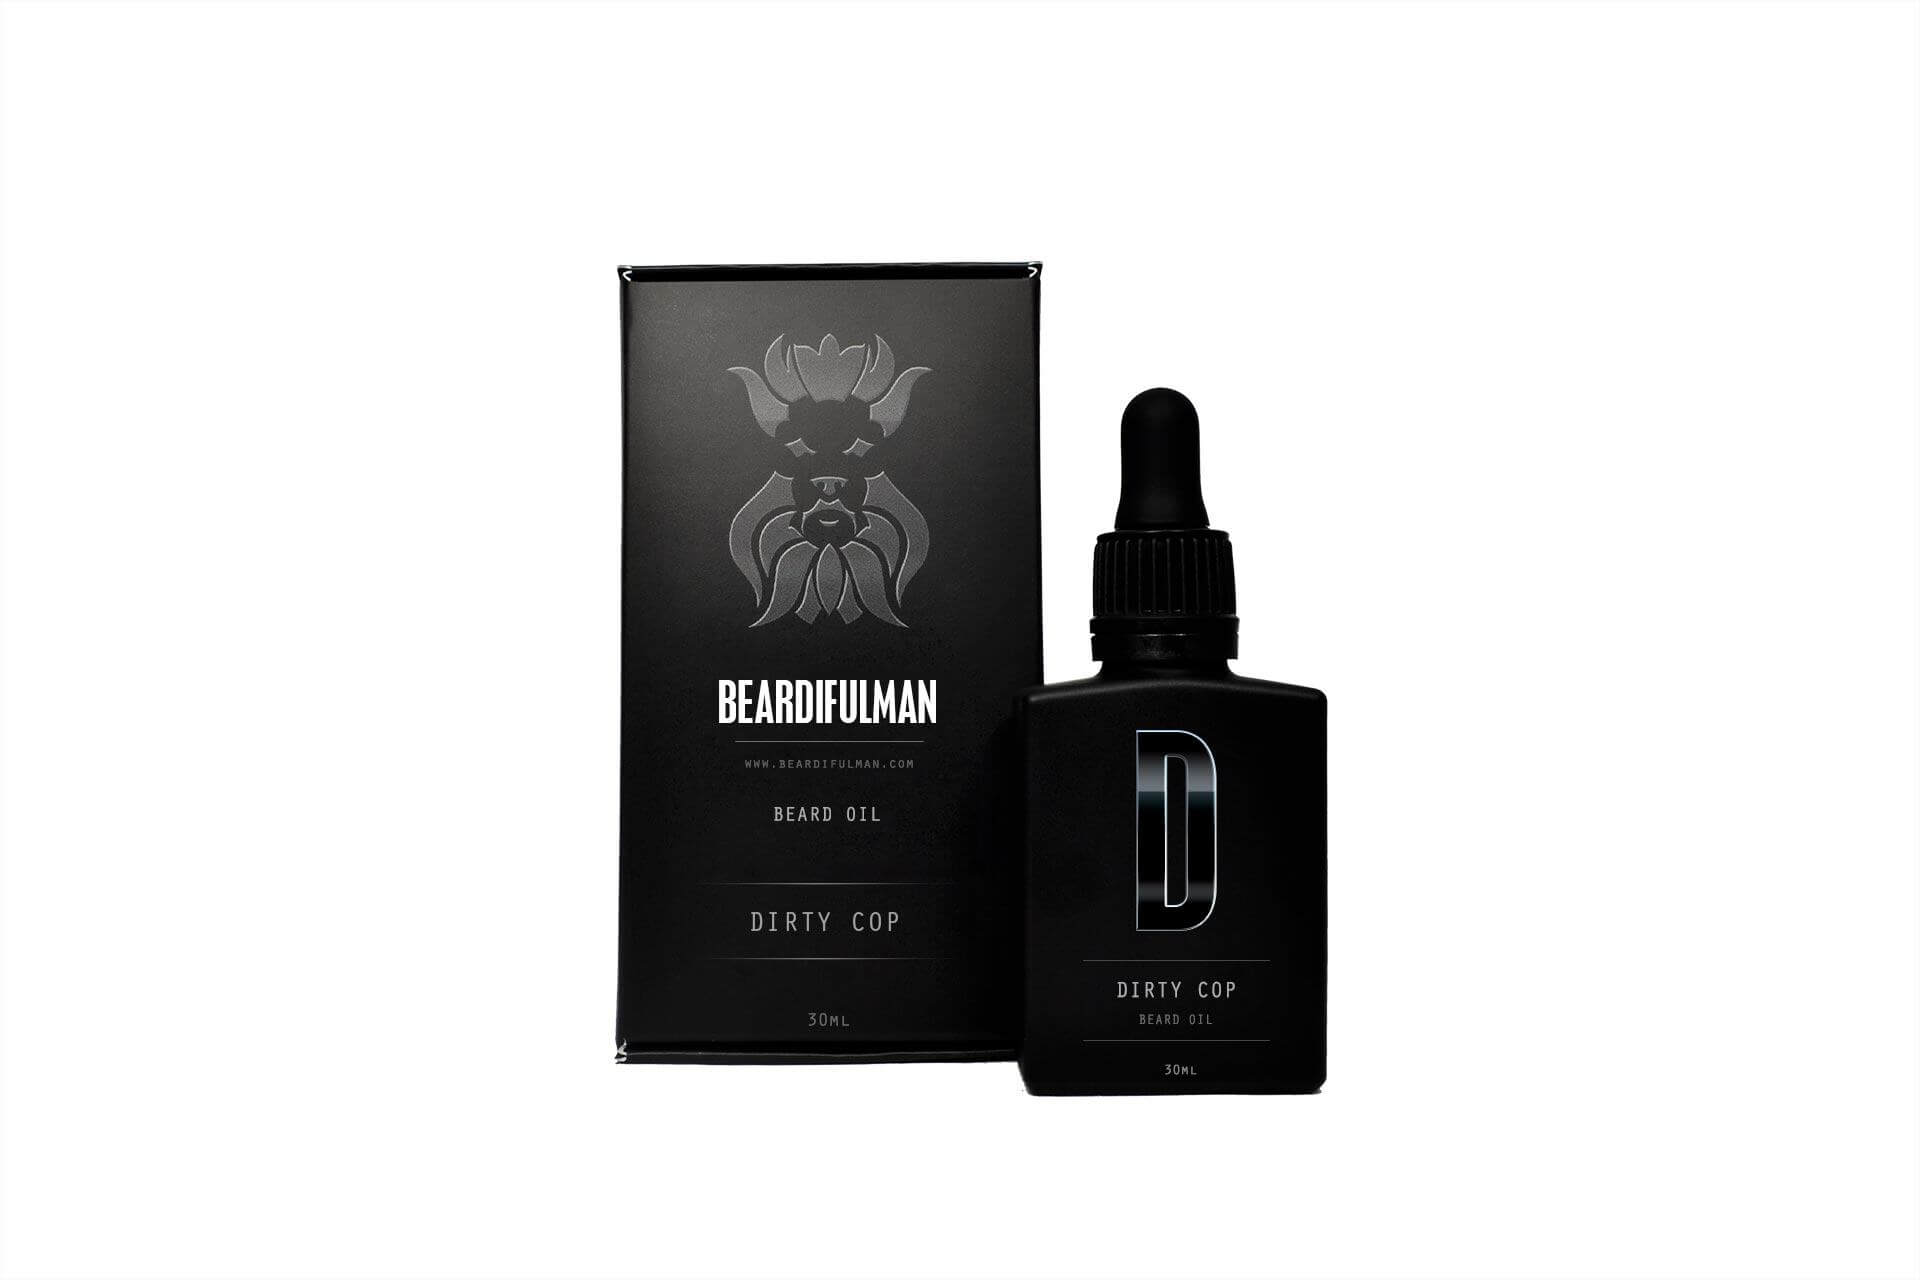 Dirty Cop Beard Oil - Premium beard care oil from Beardifulman